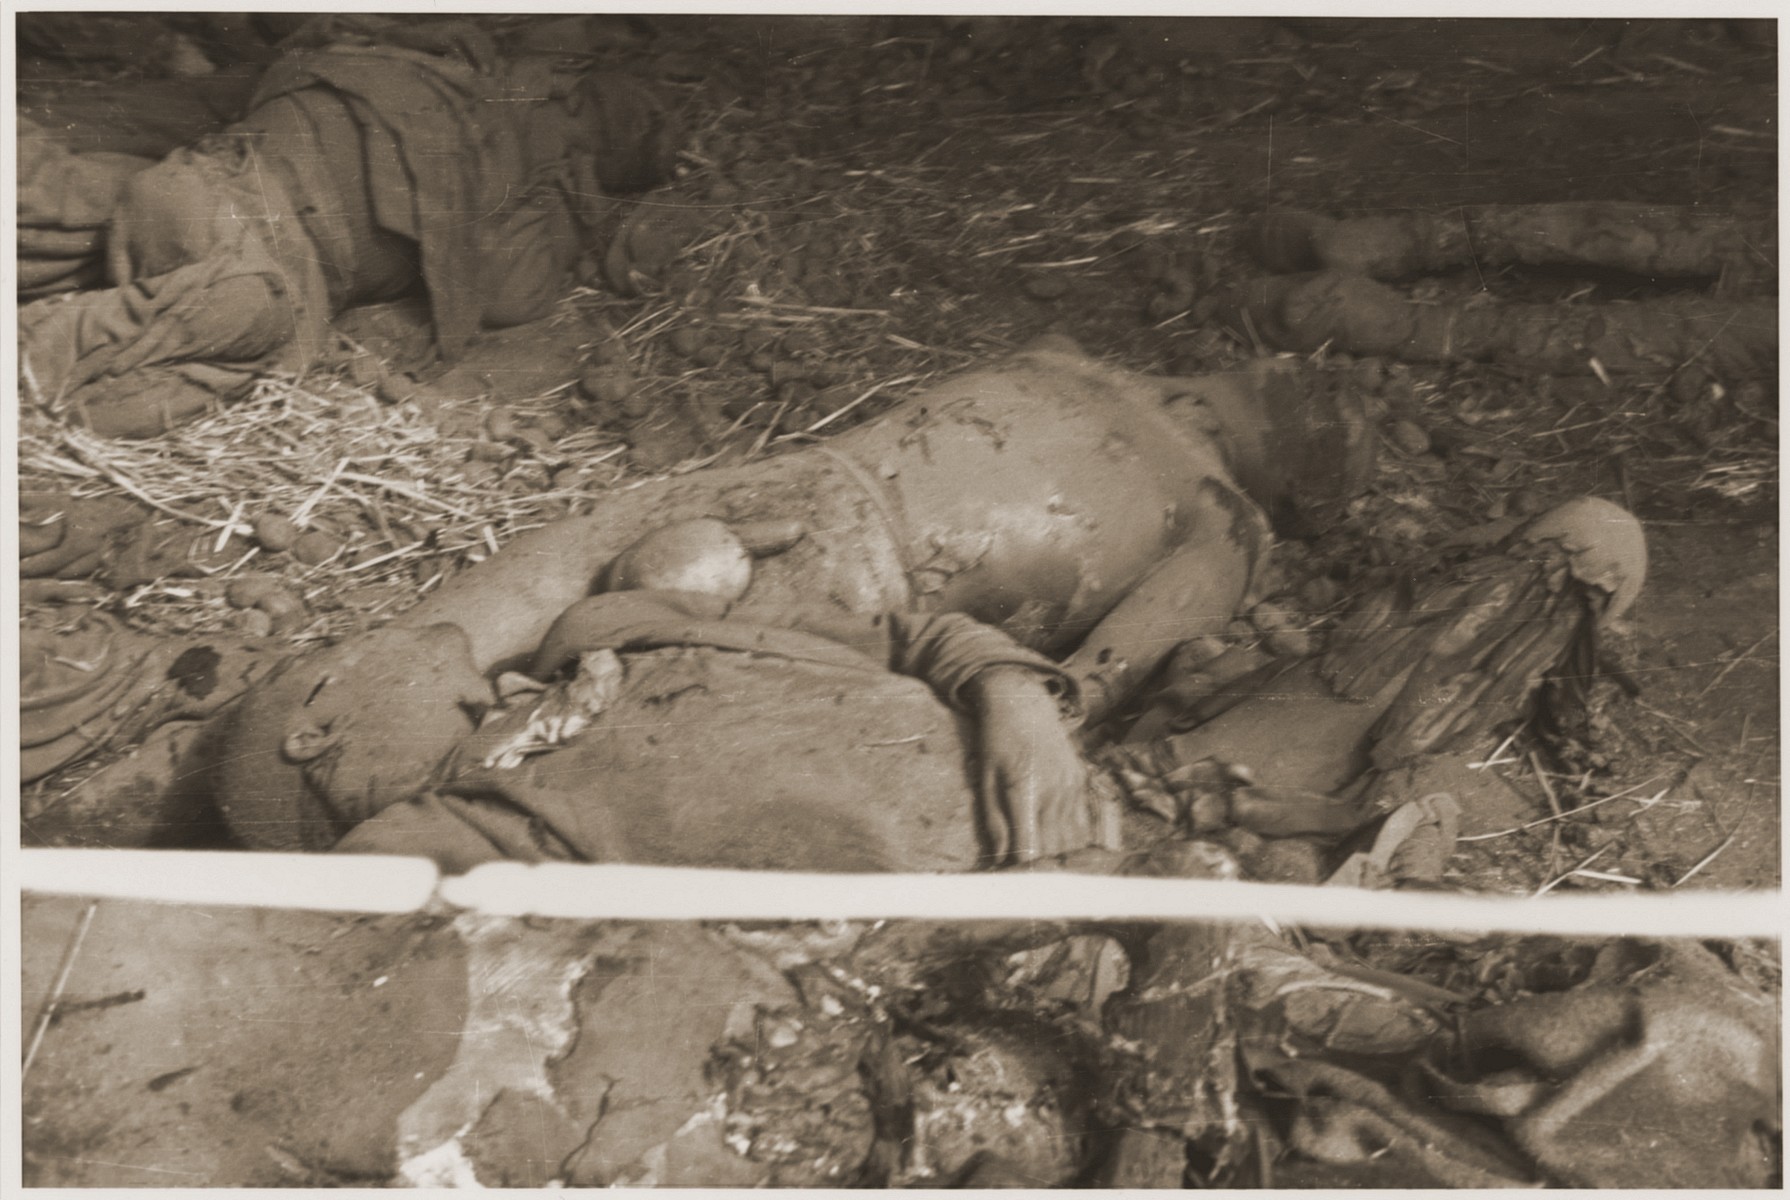 Bodies inside a barn near Gardelegen, where over 1,000 prisoners were killed by the SS.